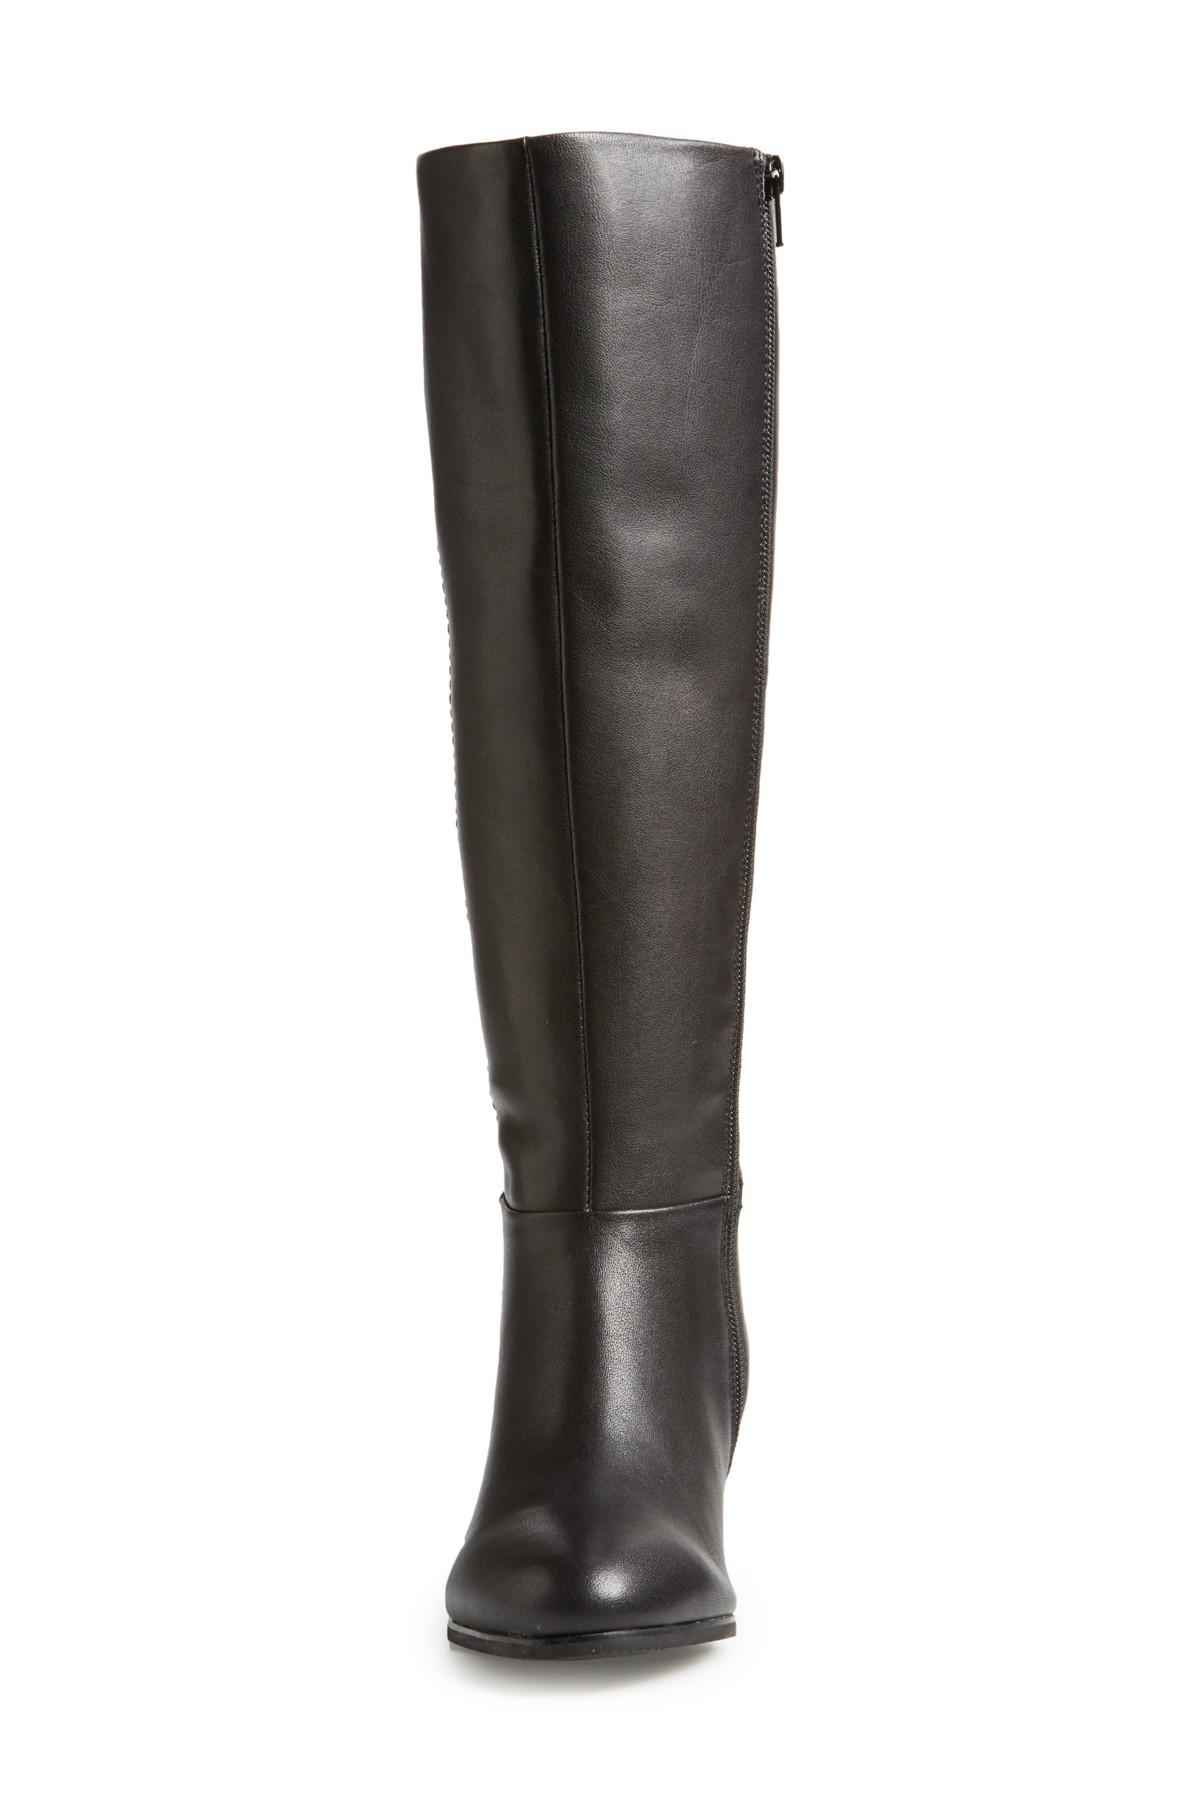 vionic women's tahlia tall boot